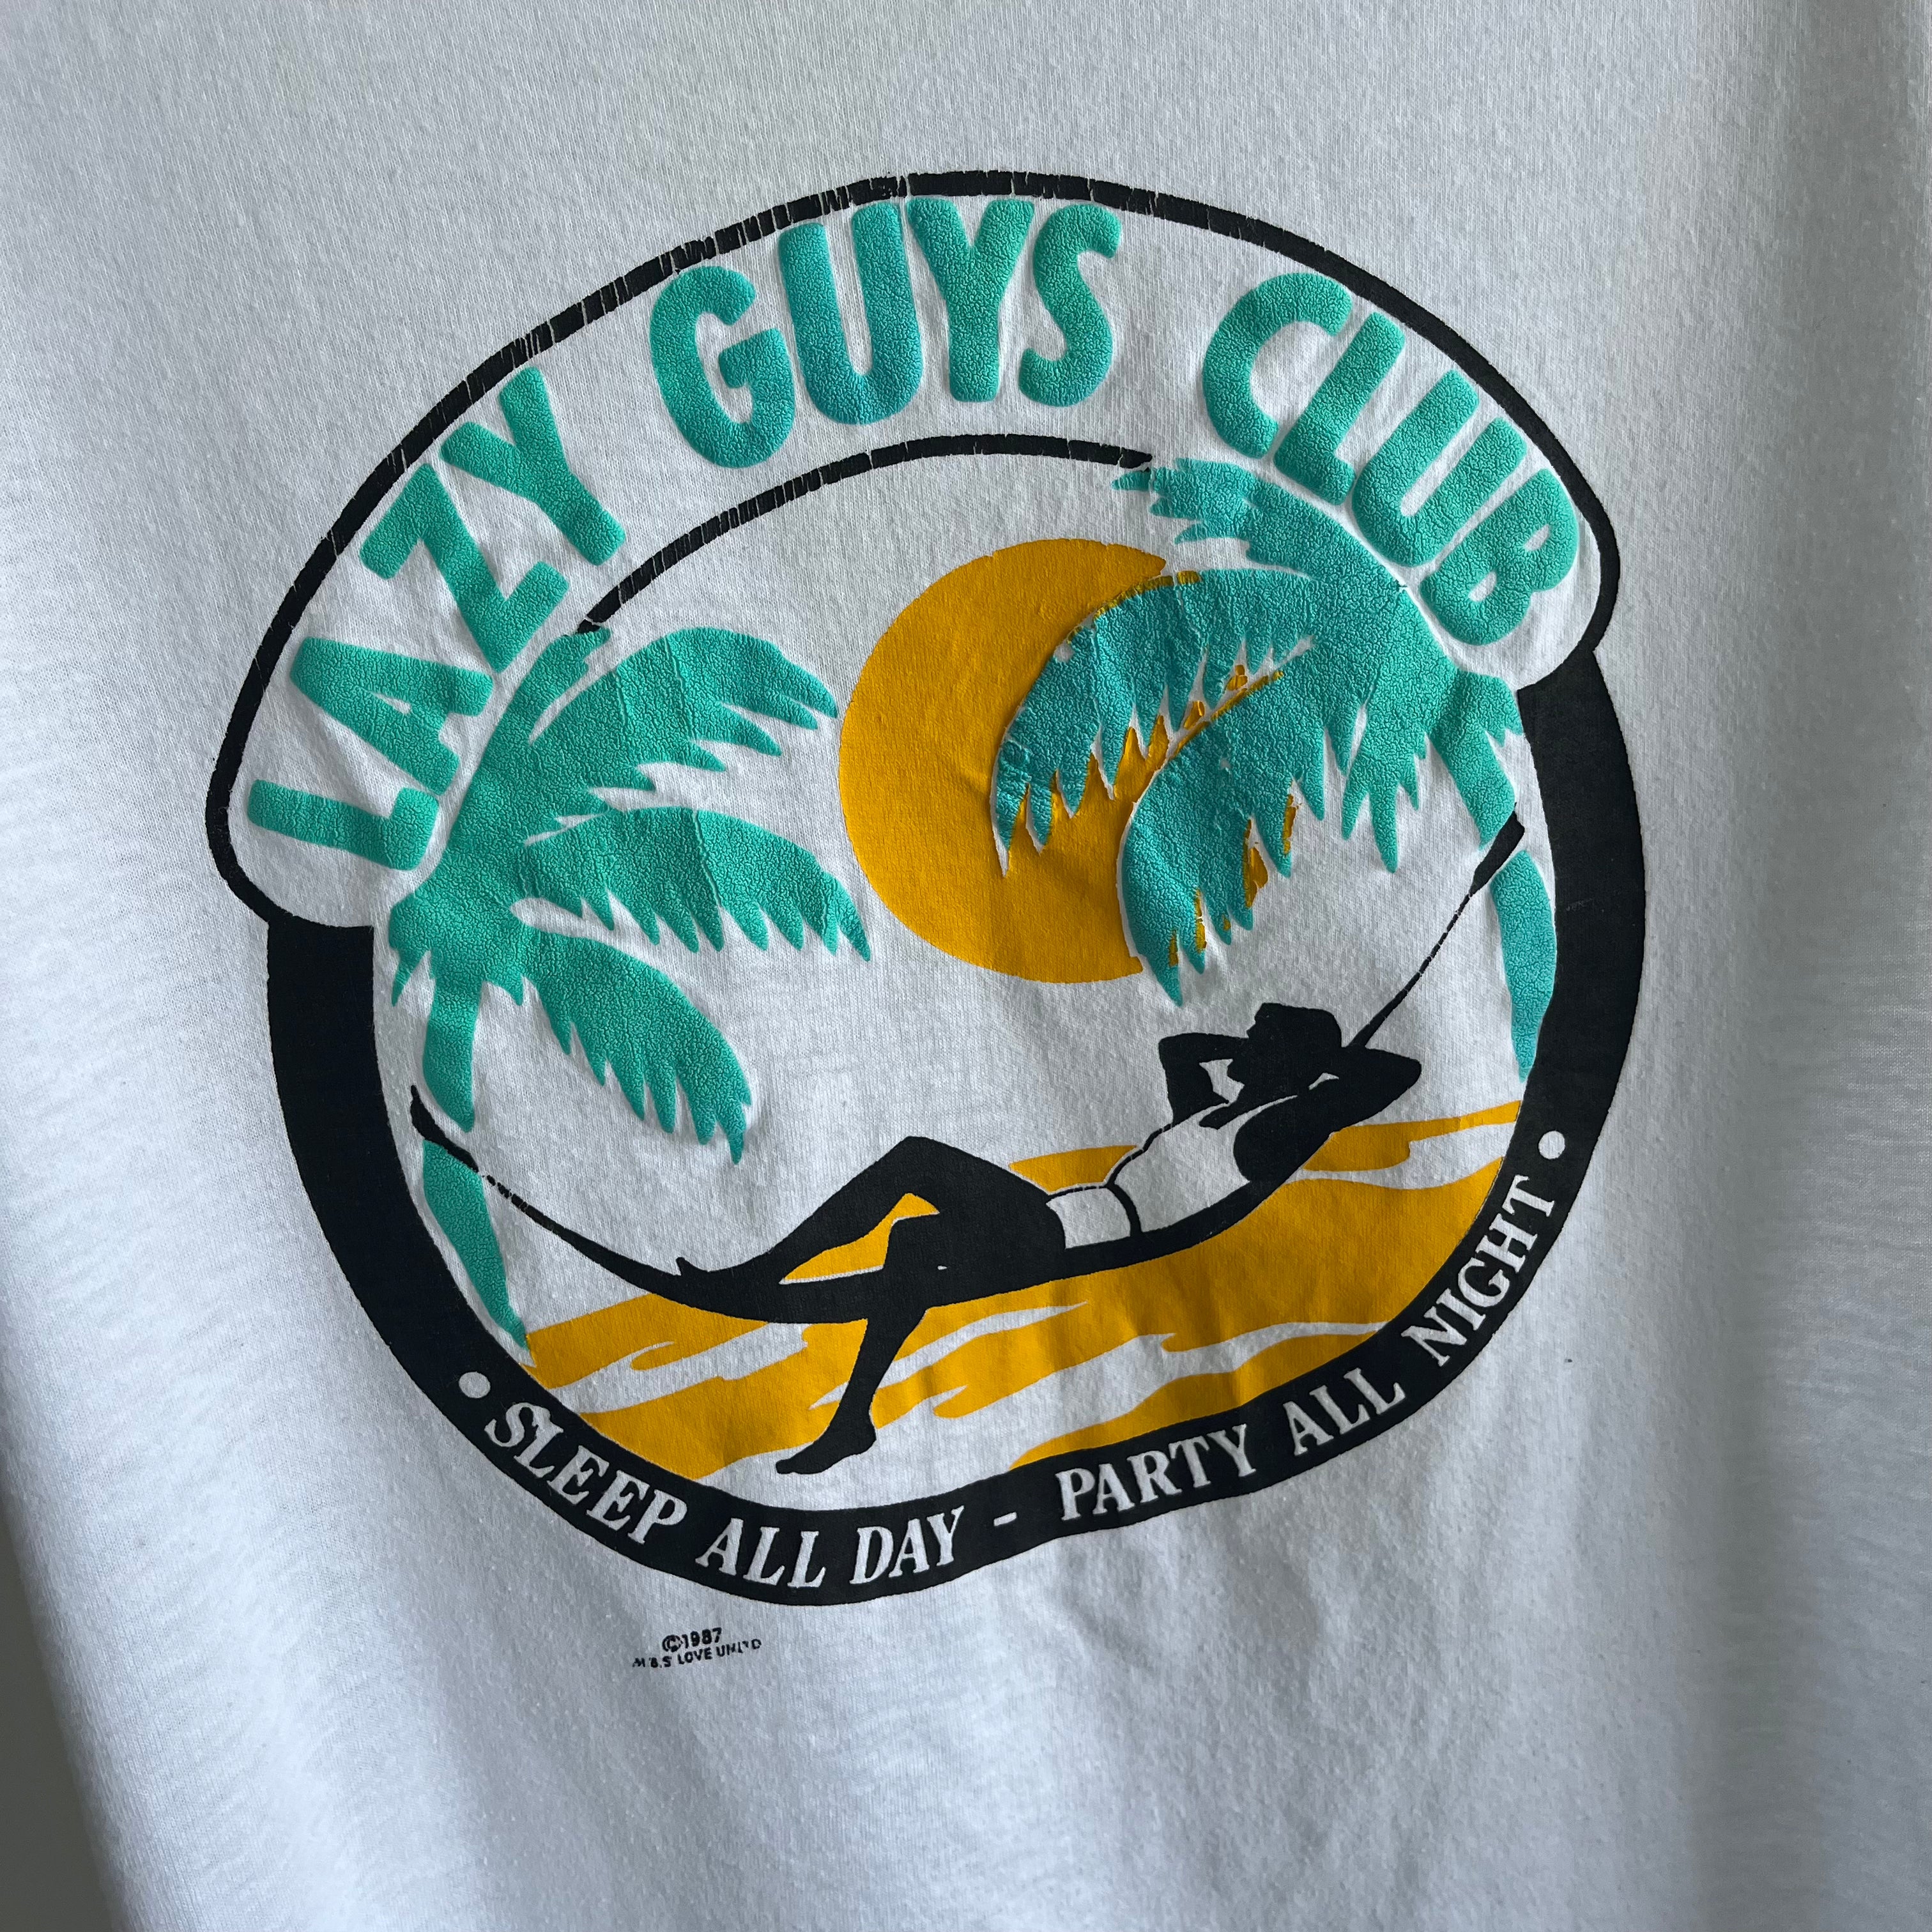 1987 Lazy Boys Club T-SHirt